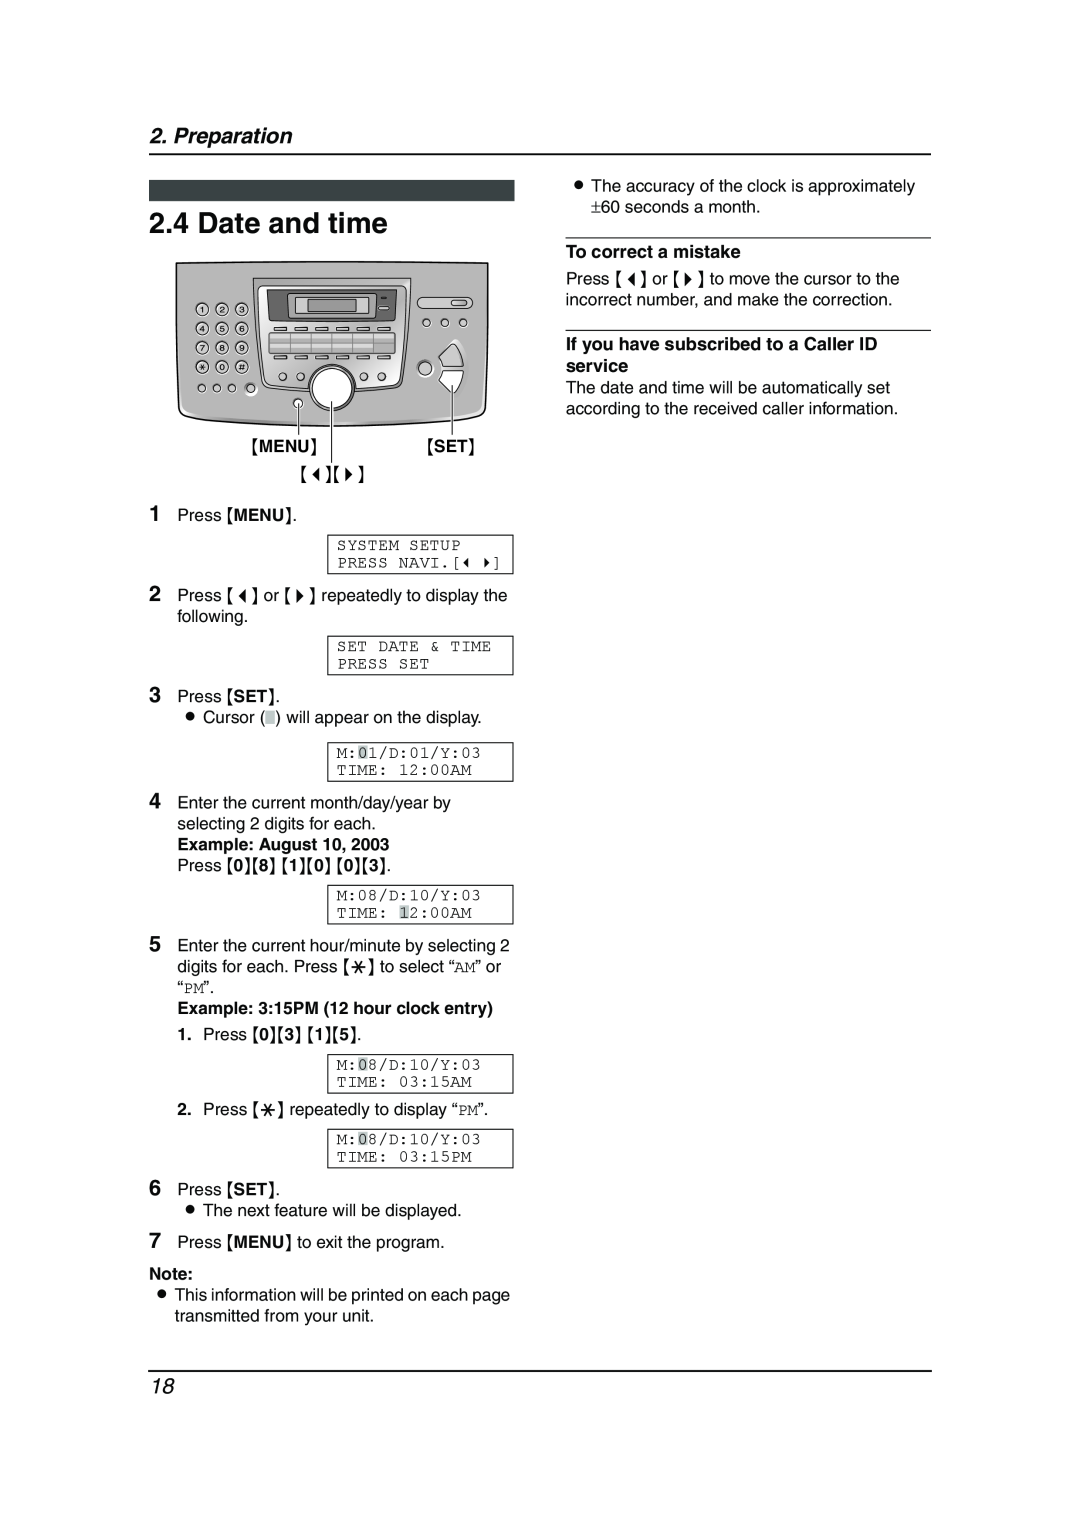 Panasonic KX-FL511AL manual Date and time, Preparation 